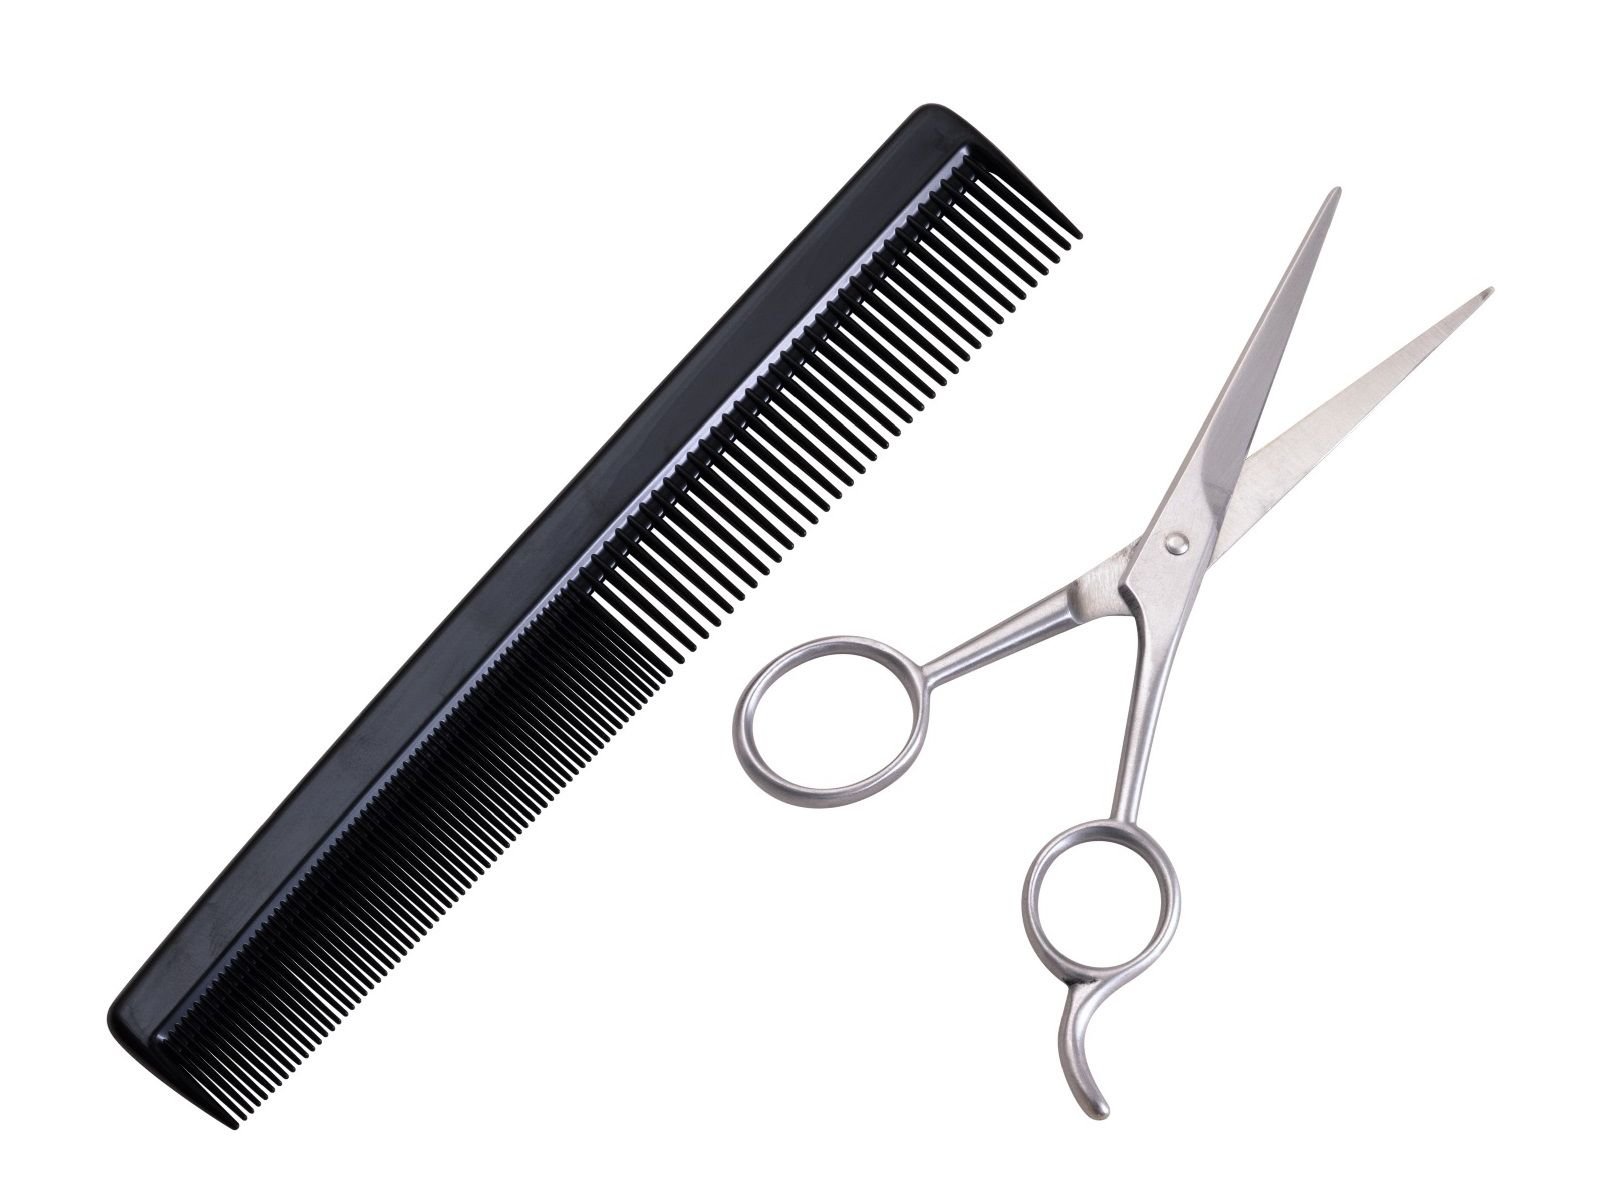 comb and scissors